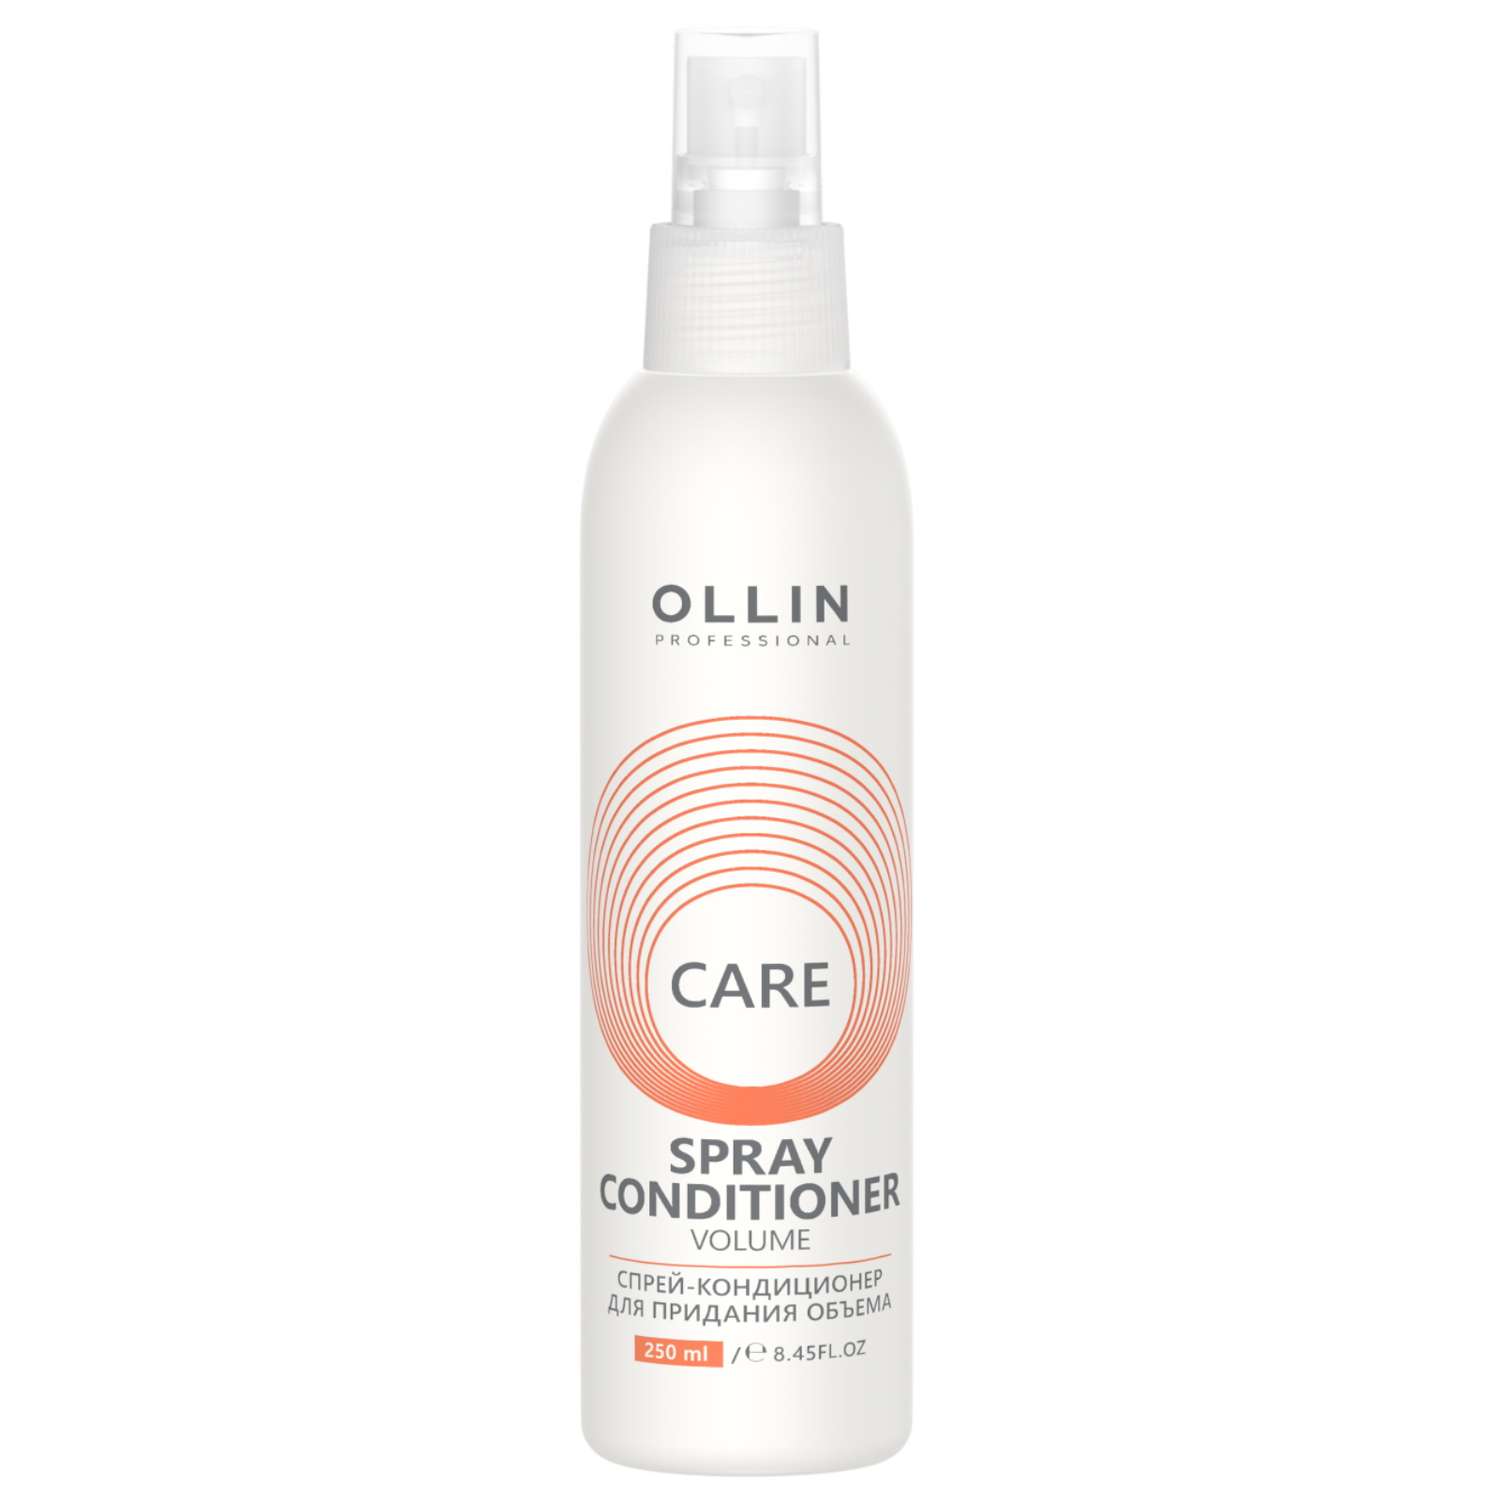 Спрей-кондиционер Ollin Care для объема волос Volume 250 мл - фото 1